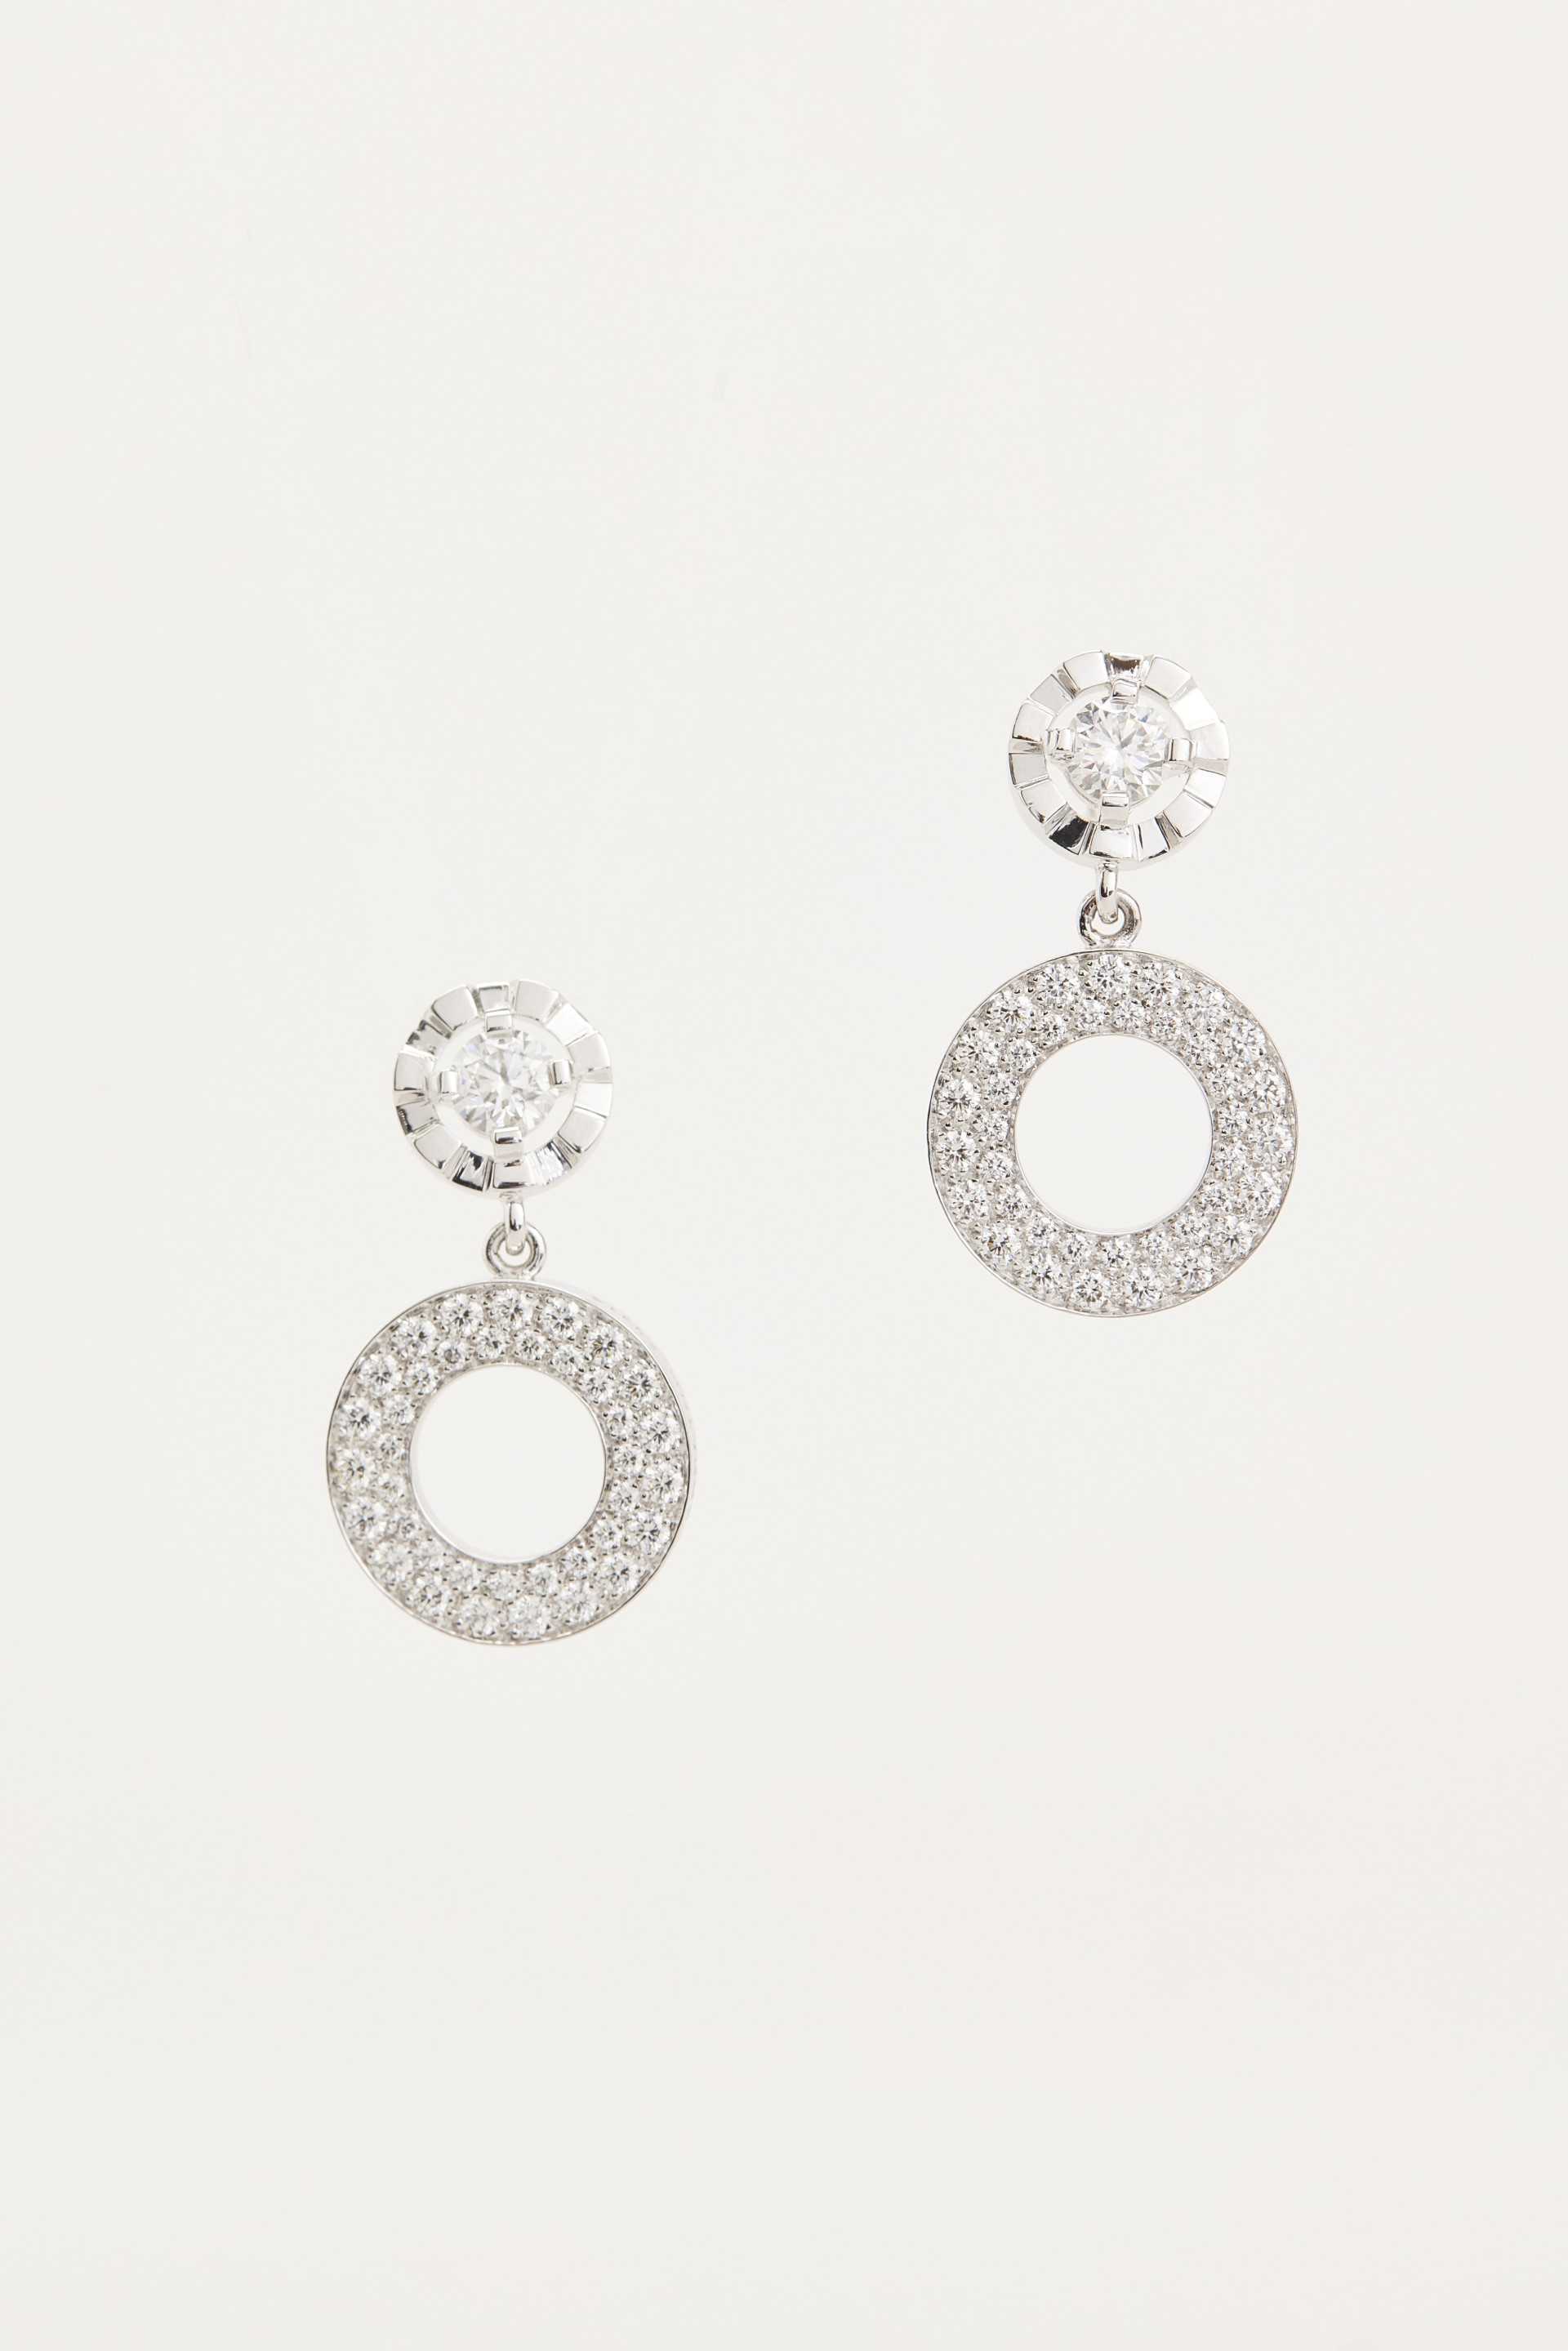 Paris White Gold Diamond Earrings